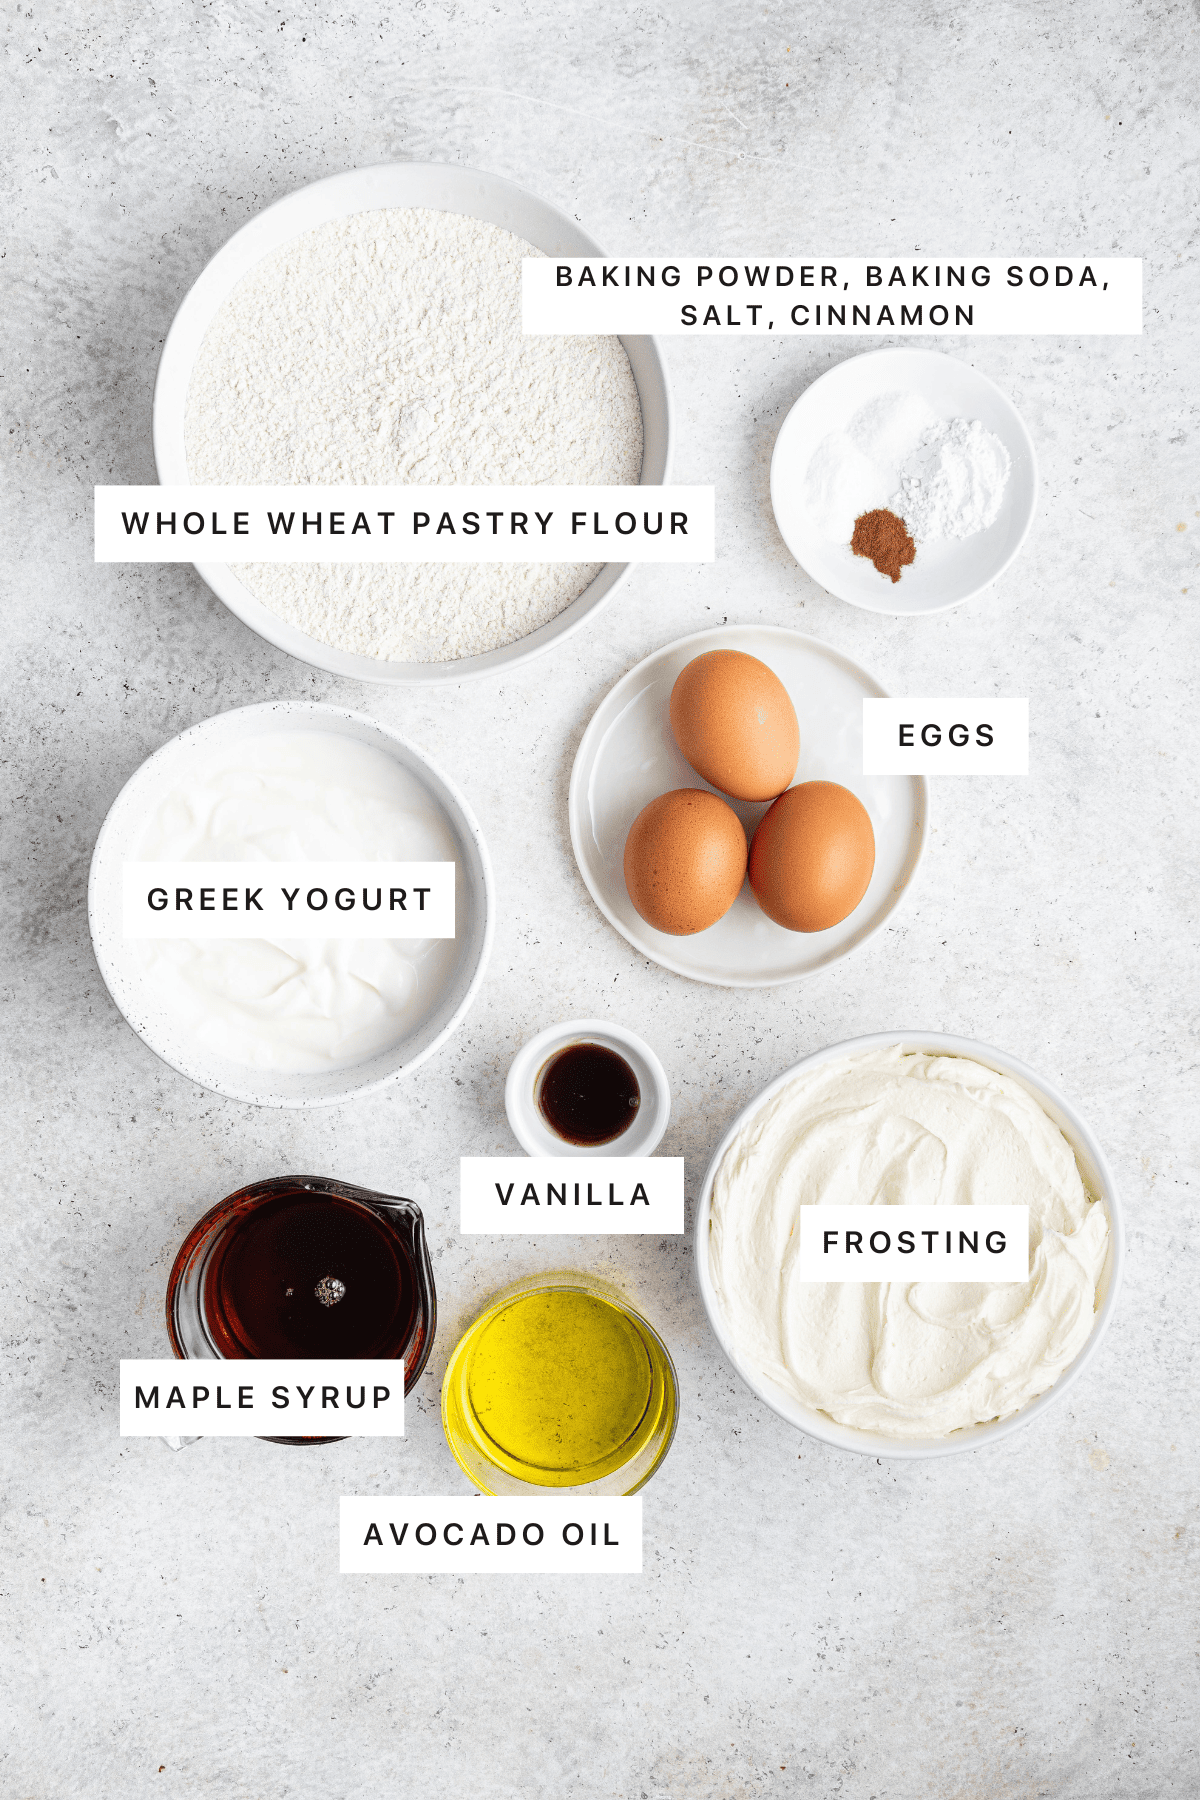 Ingredients for the healthy vanilla cake: whole wheat pastry flour, baking soda, baking powder, salt, cinnamon, eggs, greek yogurt, vanilla, maple syrup, avocado oil and frosting.